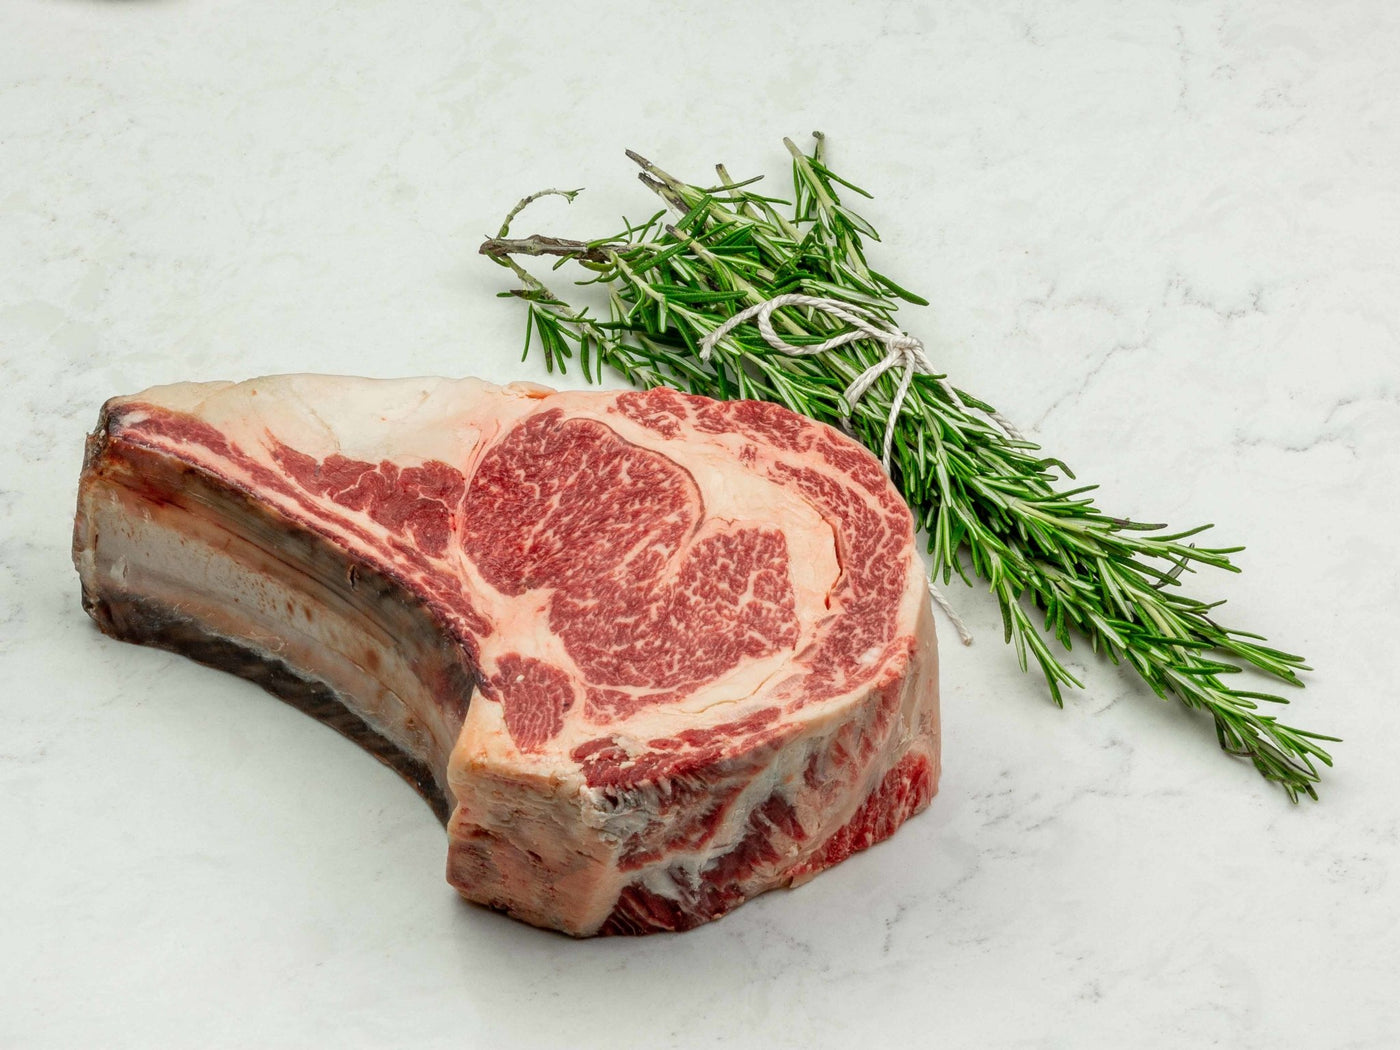 Sashi Finnish Ayrshire Prime Cut - Thomas Joseph Butchery - Ethical Dry-Aged Meat The Best Steak UK Thomas Joseph Butchery